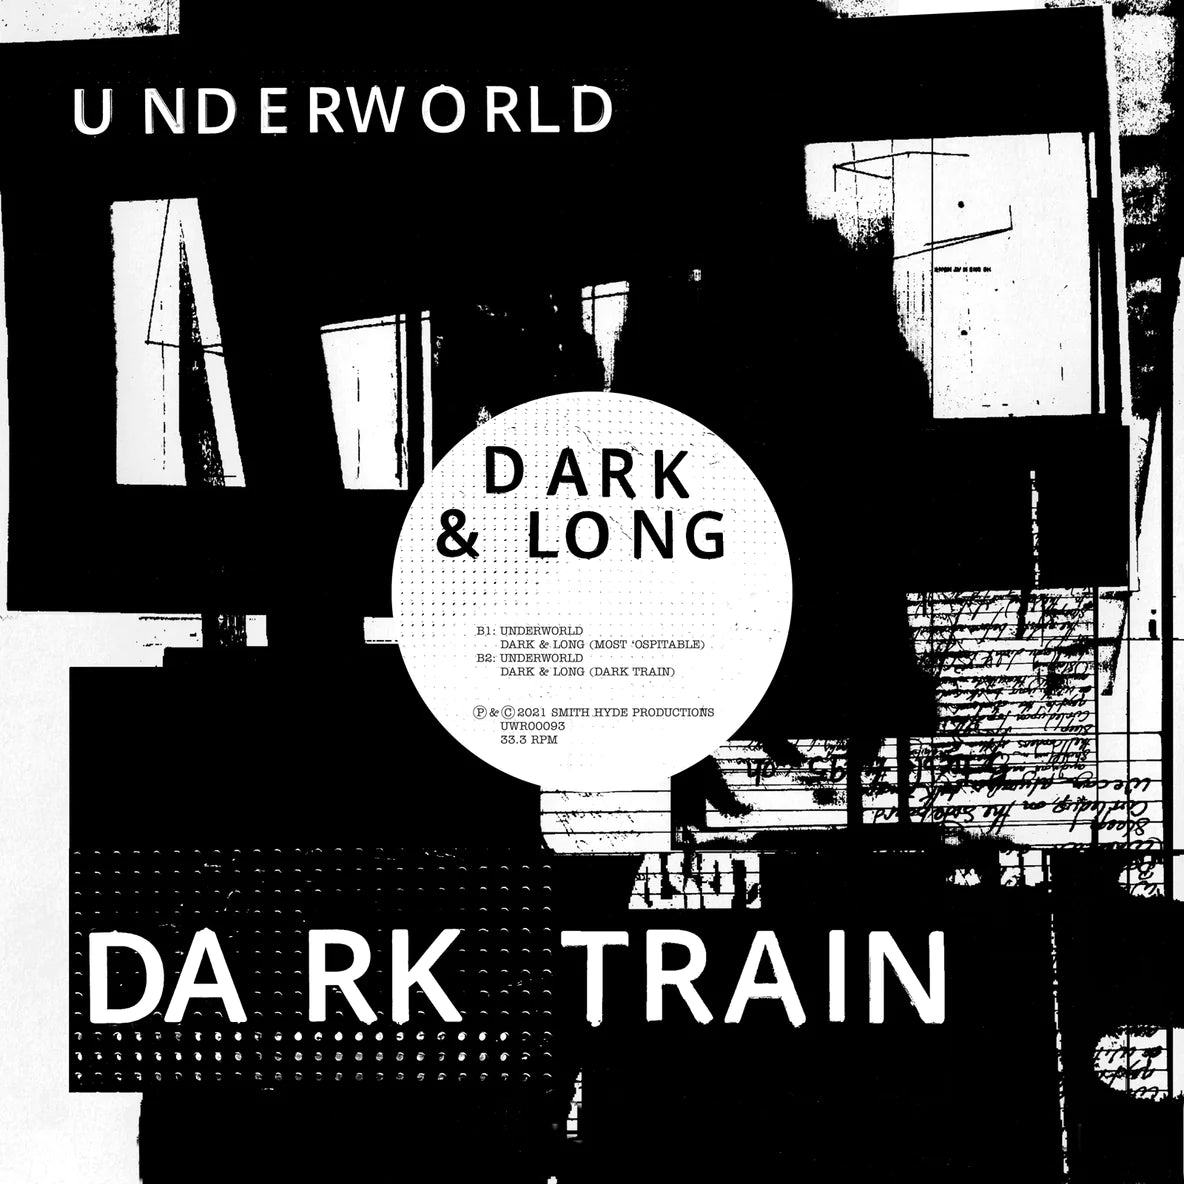 Underworld - *DARK & LONG (DARK TRAIN)* 'DARK & LONG 3' 12'' HEAVY-WEIGHT VINYL